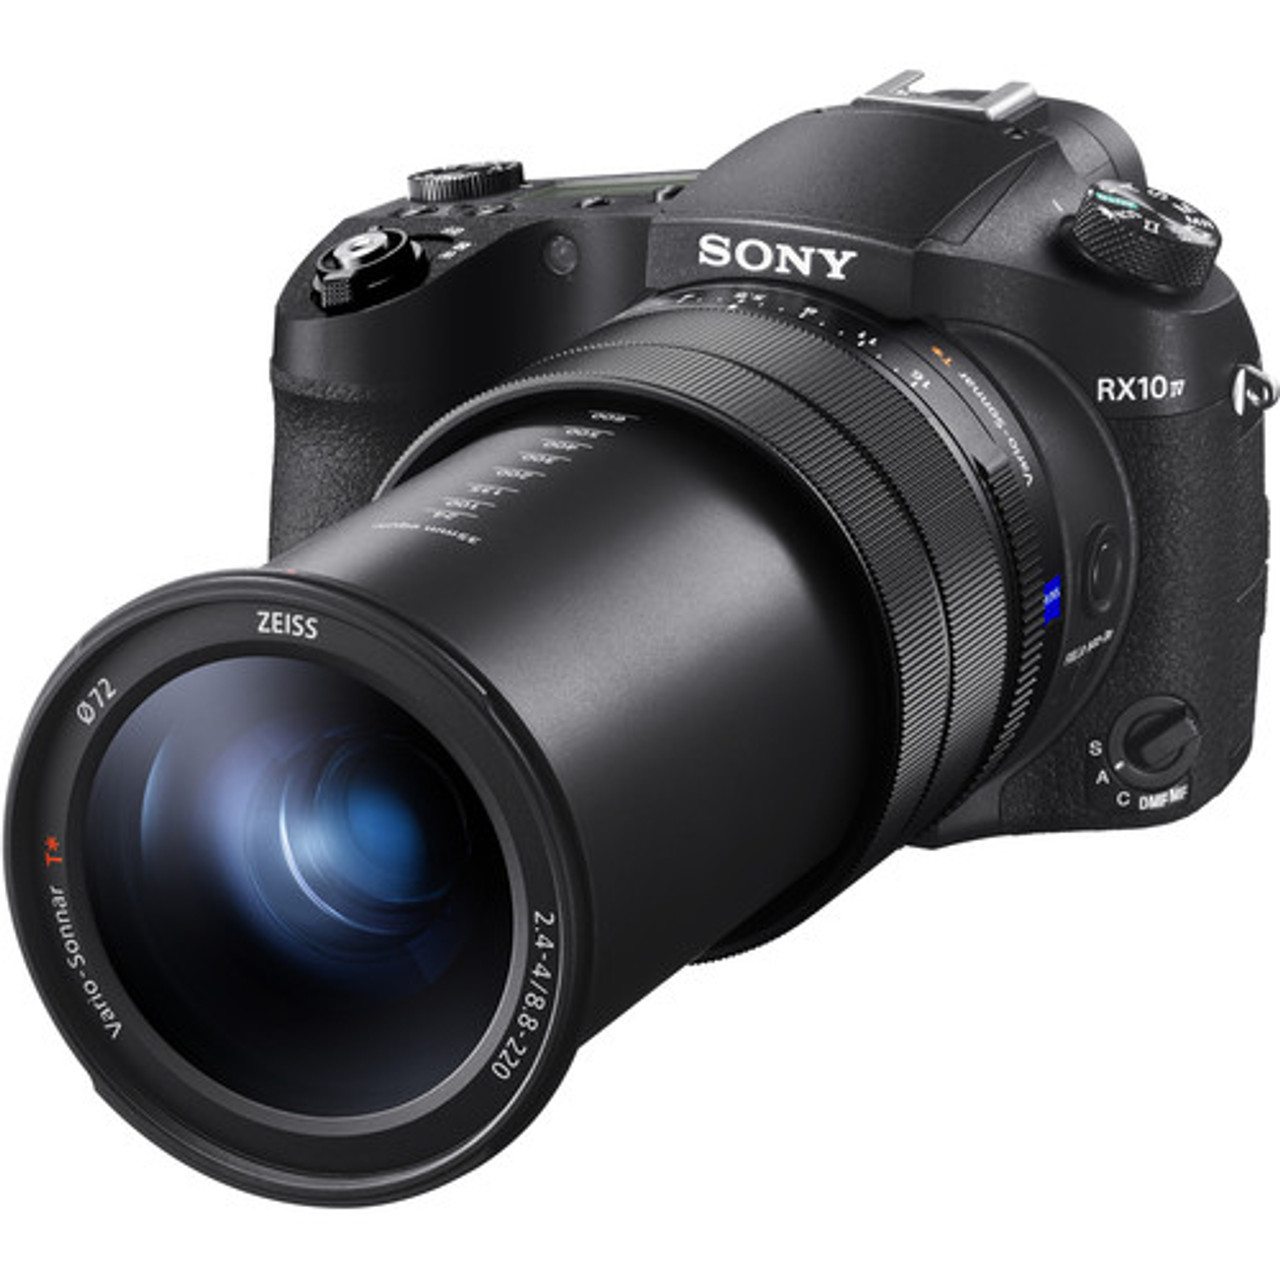 Sony Cyber-shot DSC-RX10 IV Review